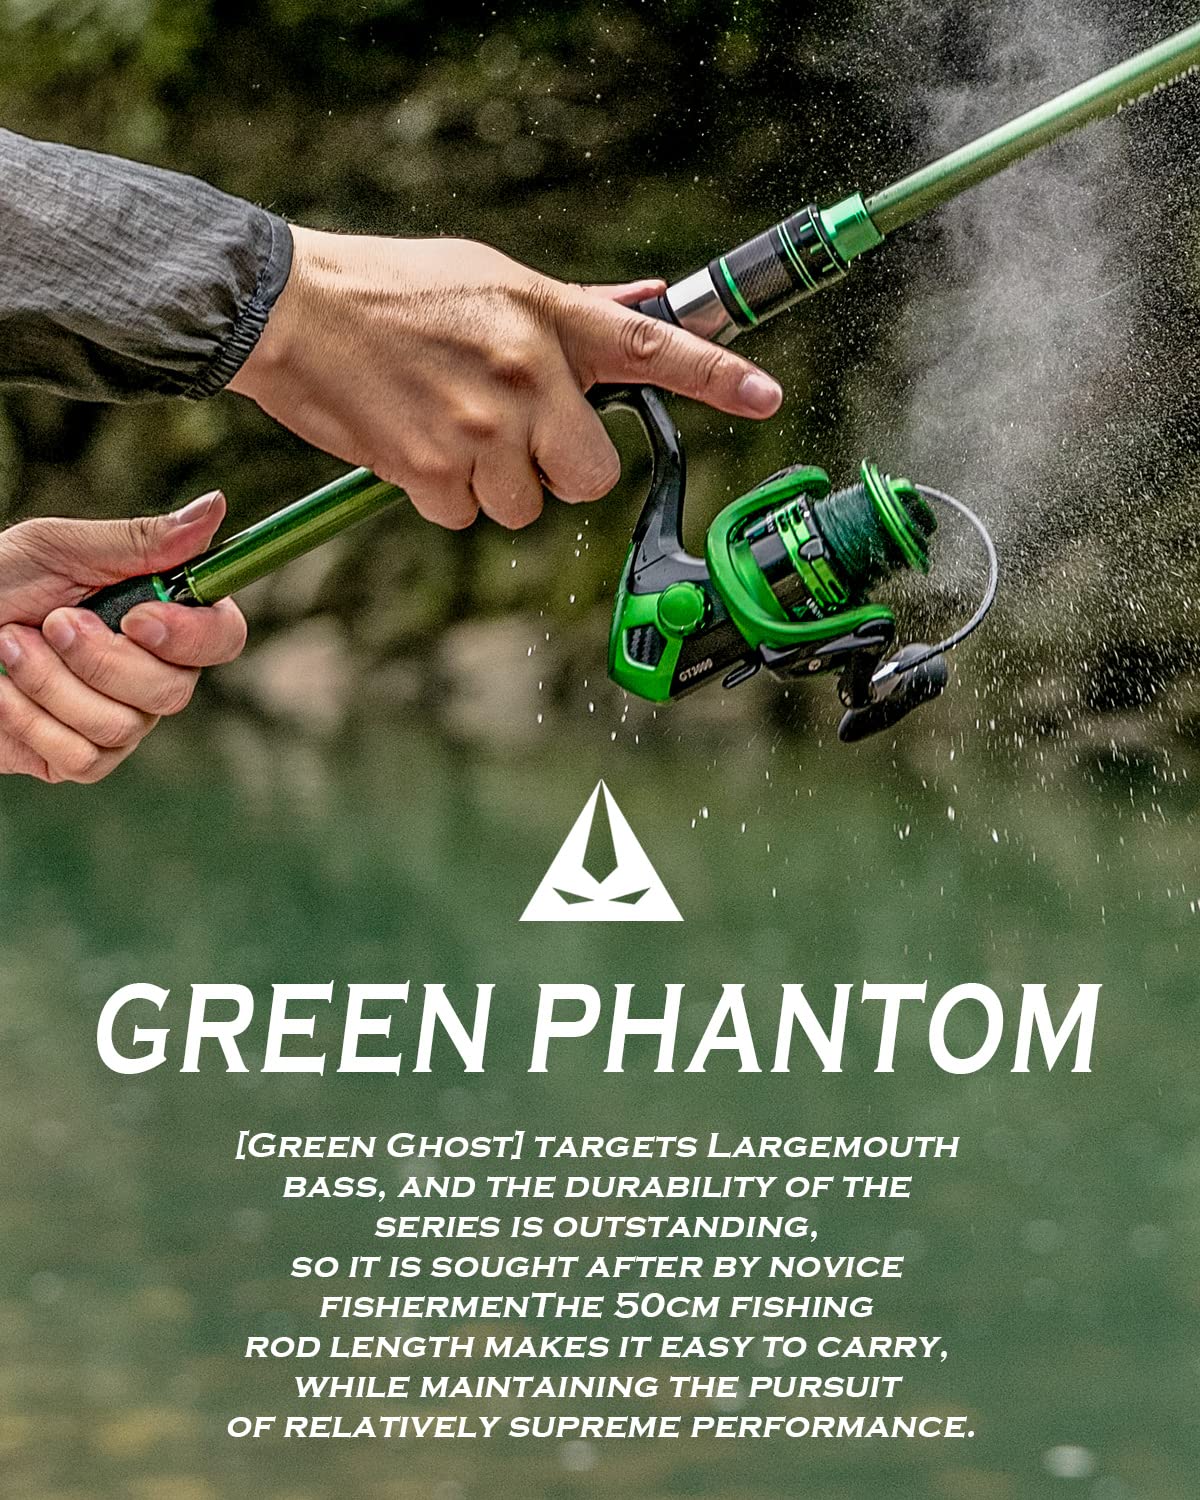 Ghosthorn Green Phantom Telescopic Fishing Rod and Reel Combos